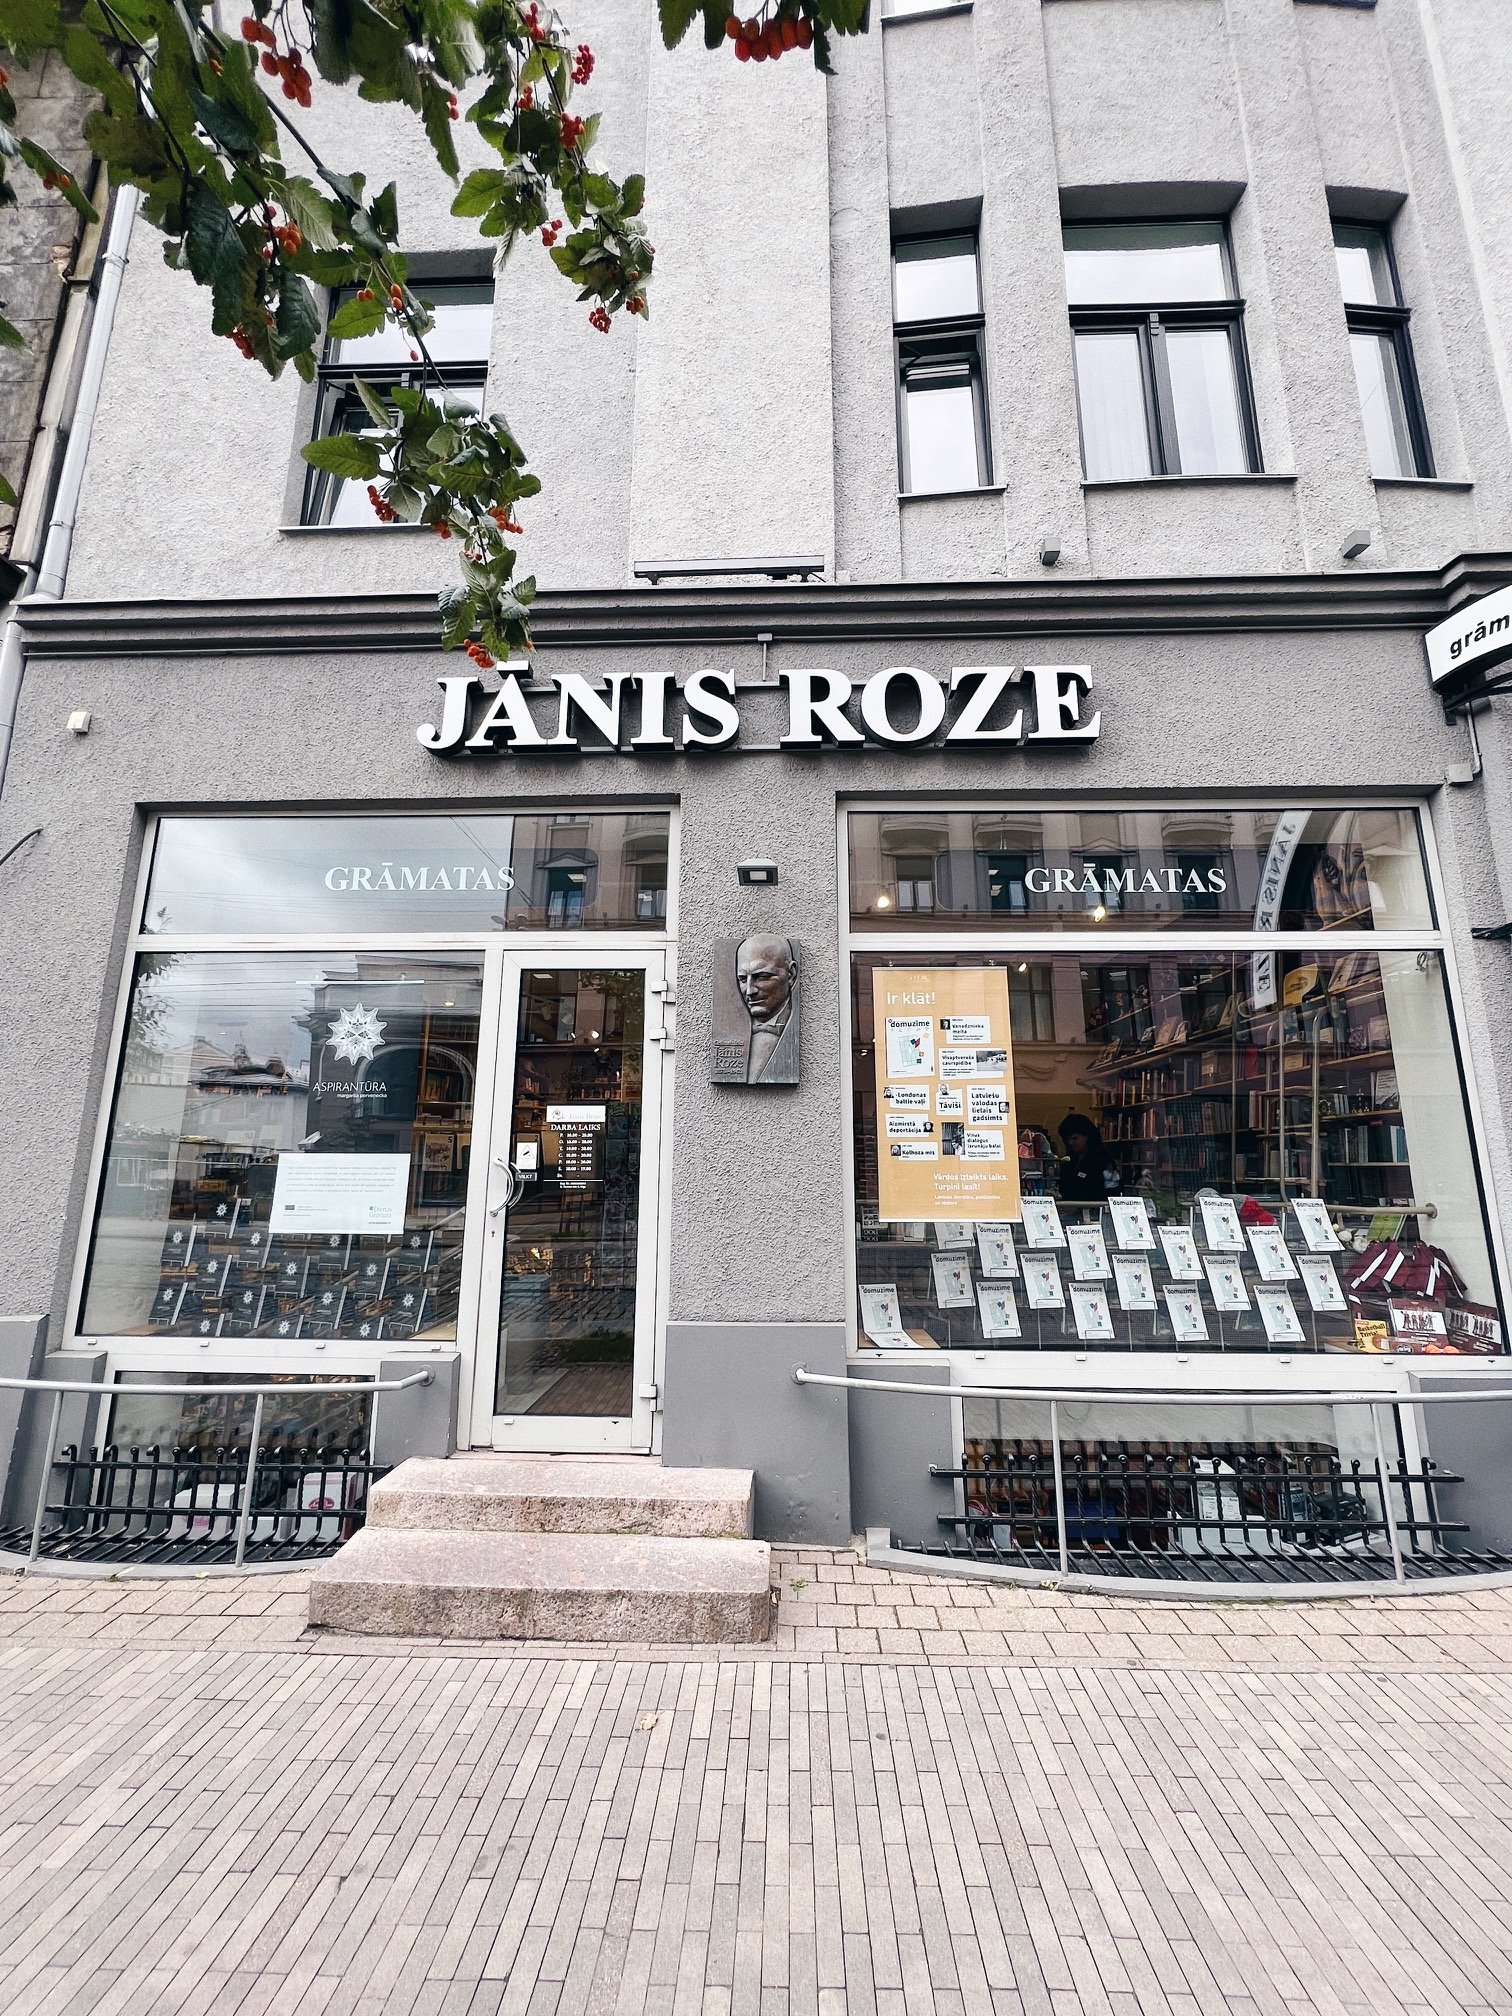 Janis Roze bookstore in Riga Latvia - photo by ashley whitlatch - booksaremythirdplace3.JPG